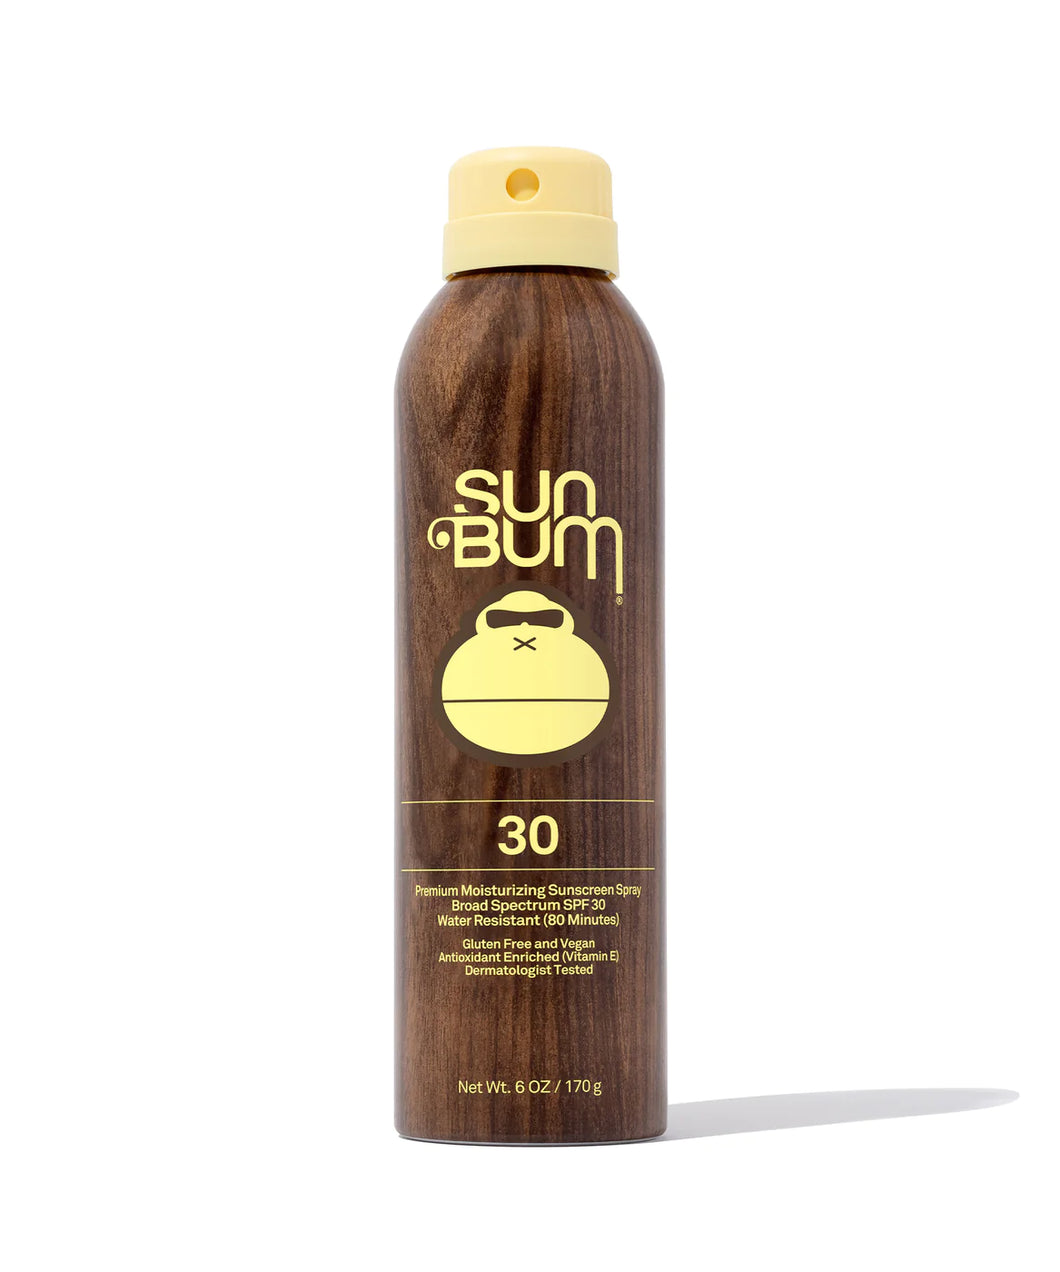 Sun Bum: Original SPF 30 Sunscreen Spray